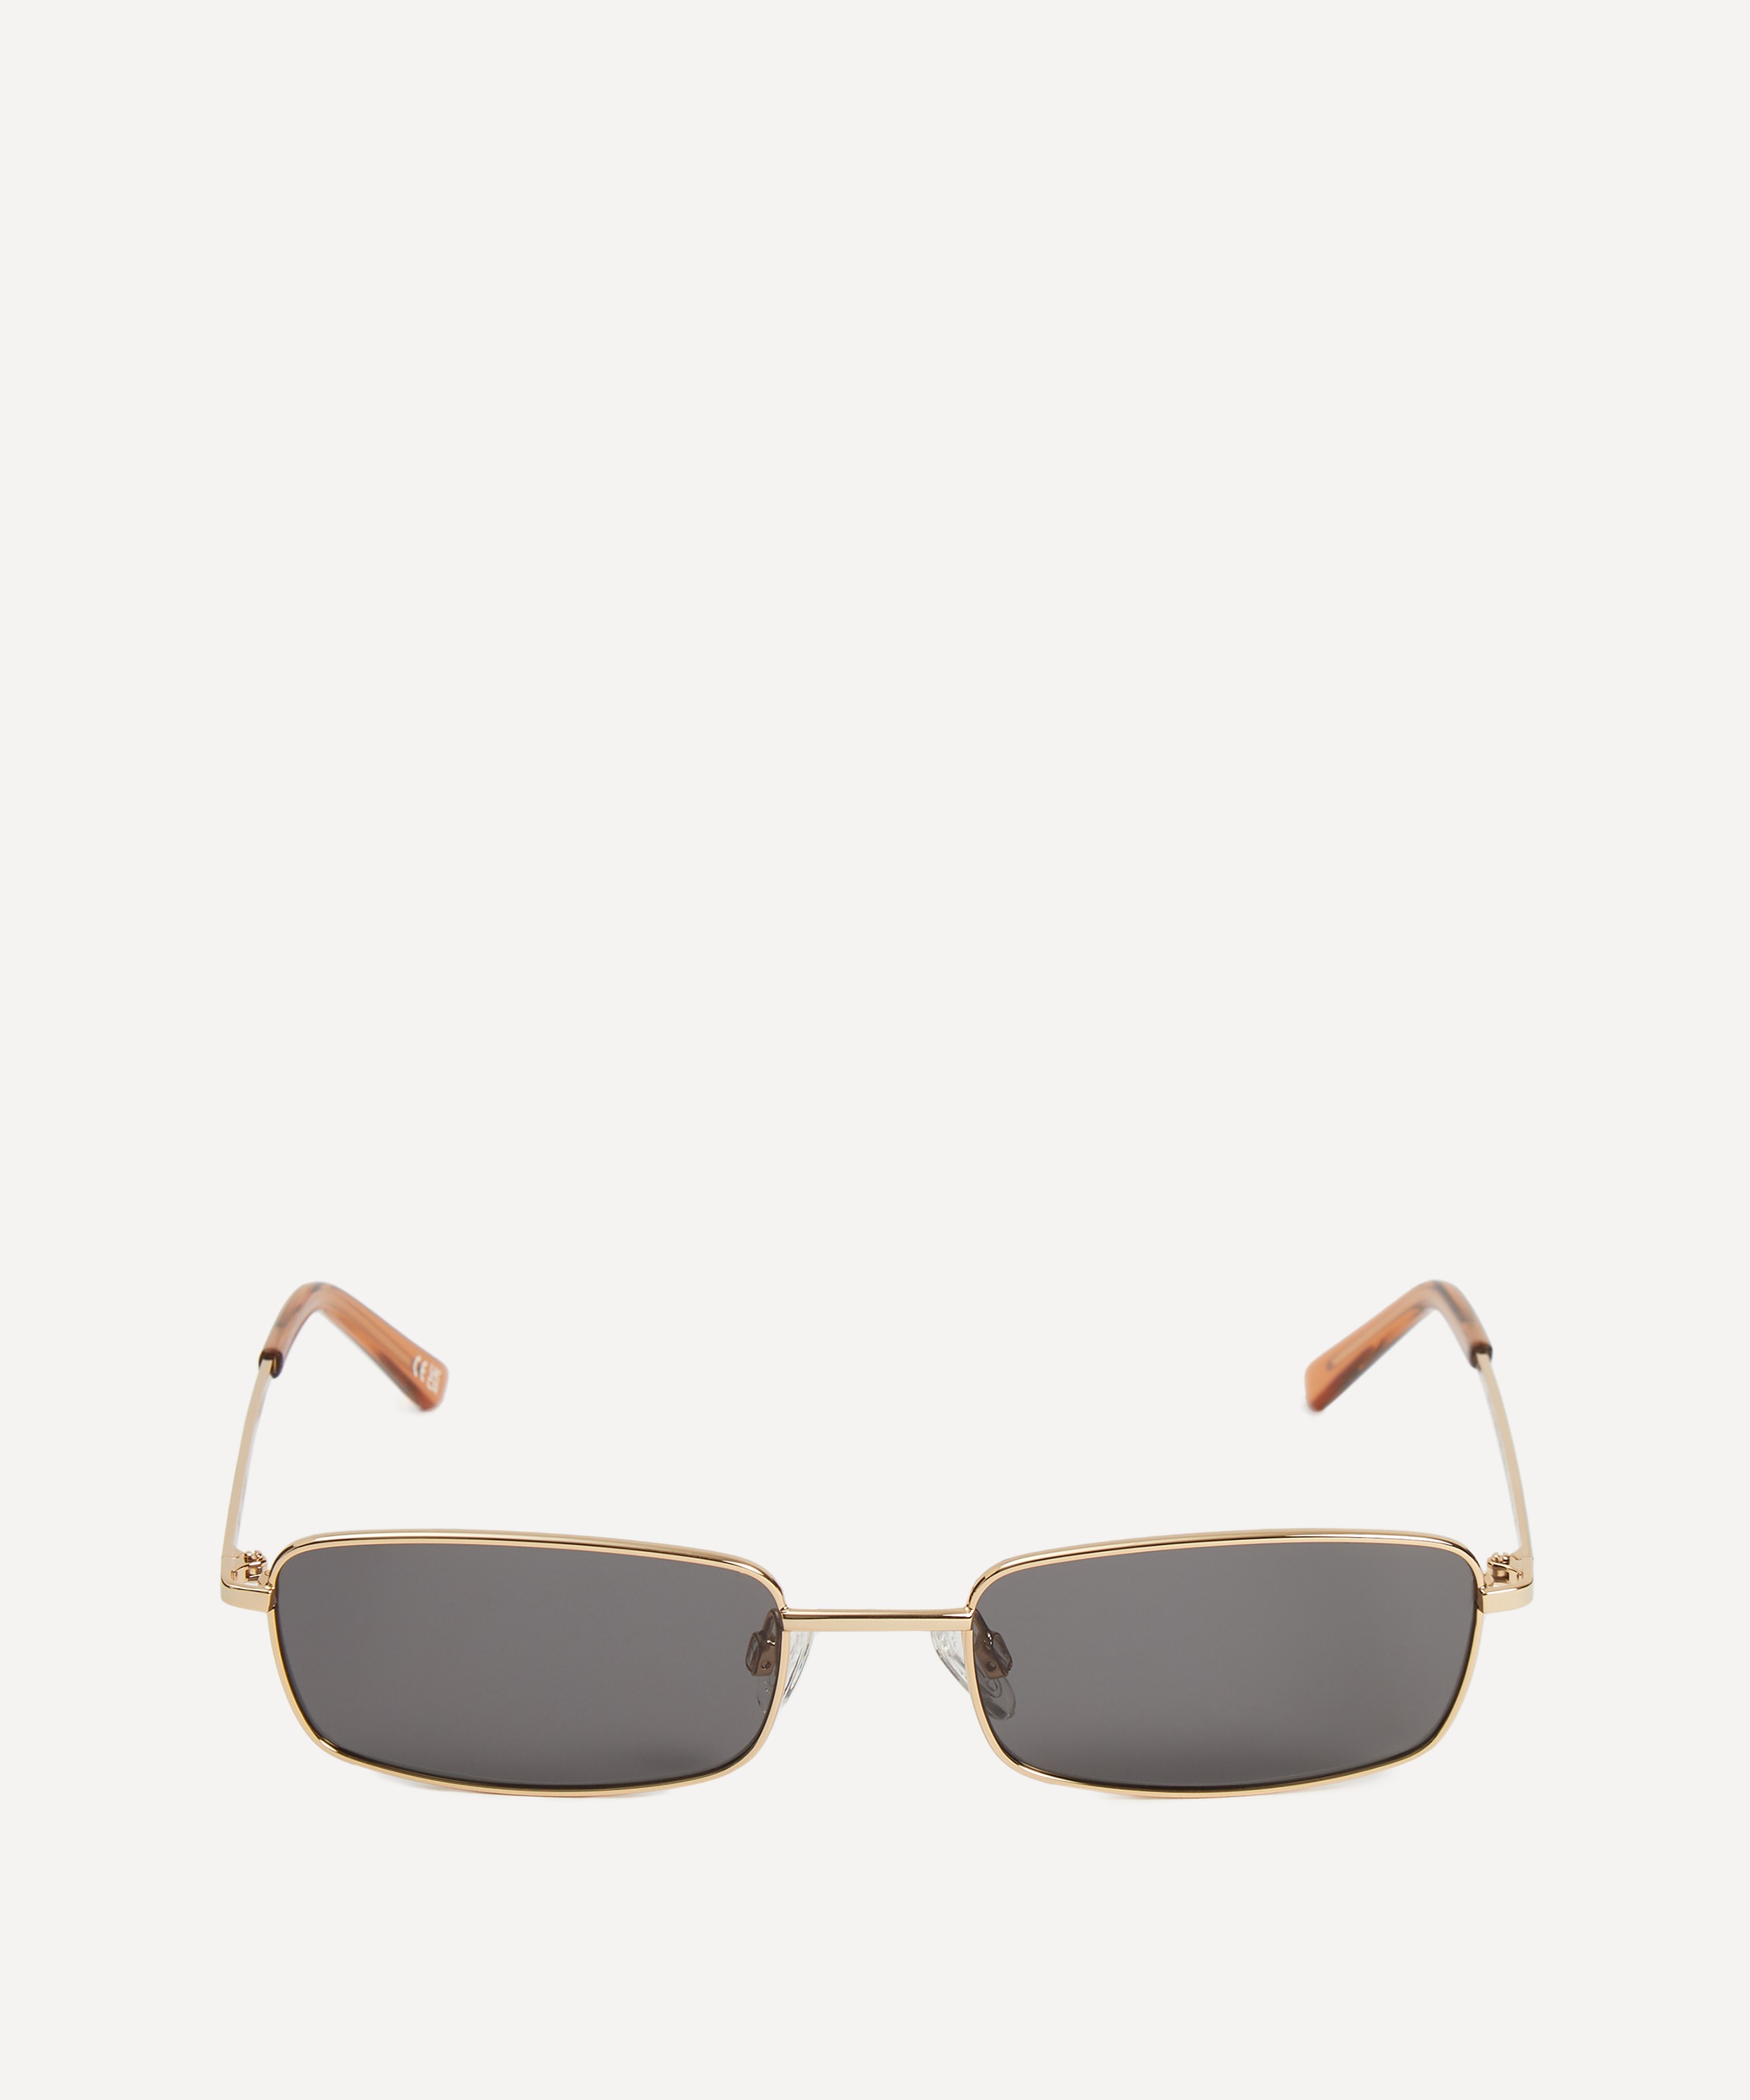 DMY BY DMY - Olsen Rectangle Sunglasses